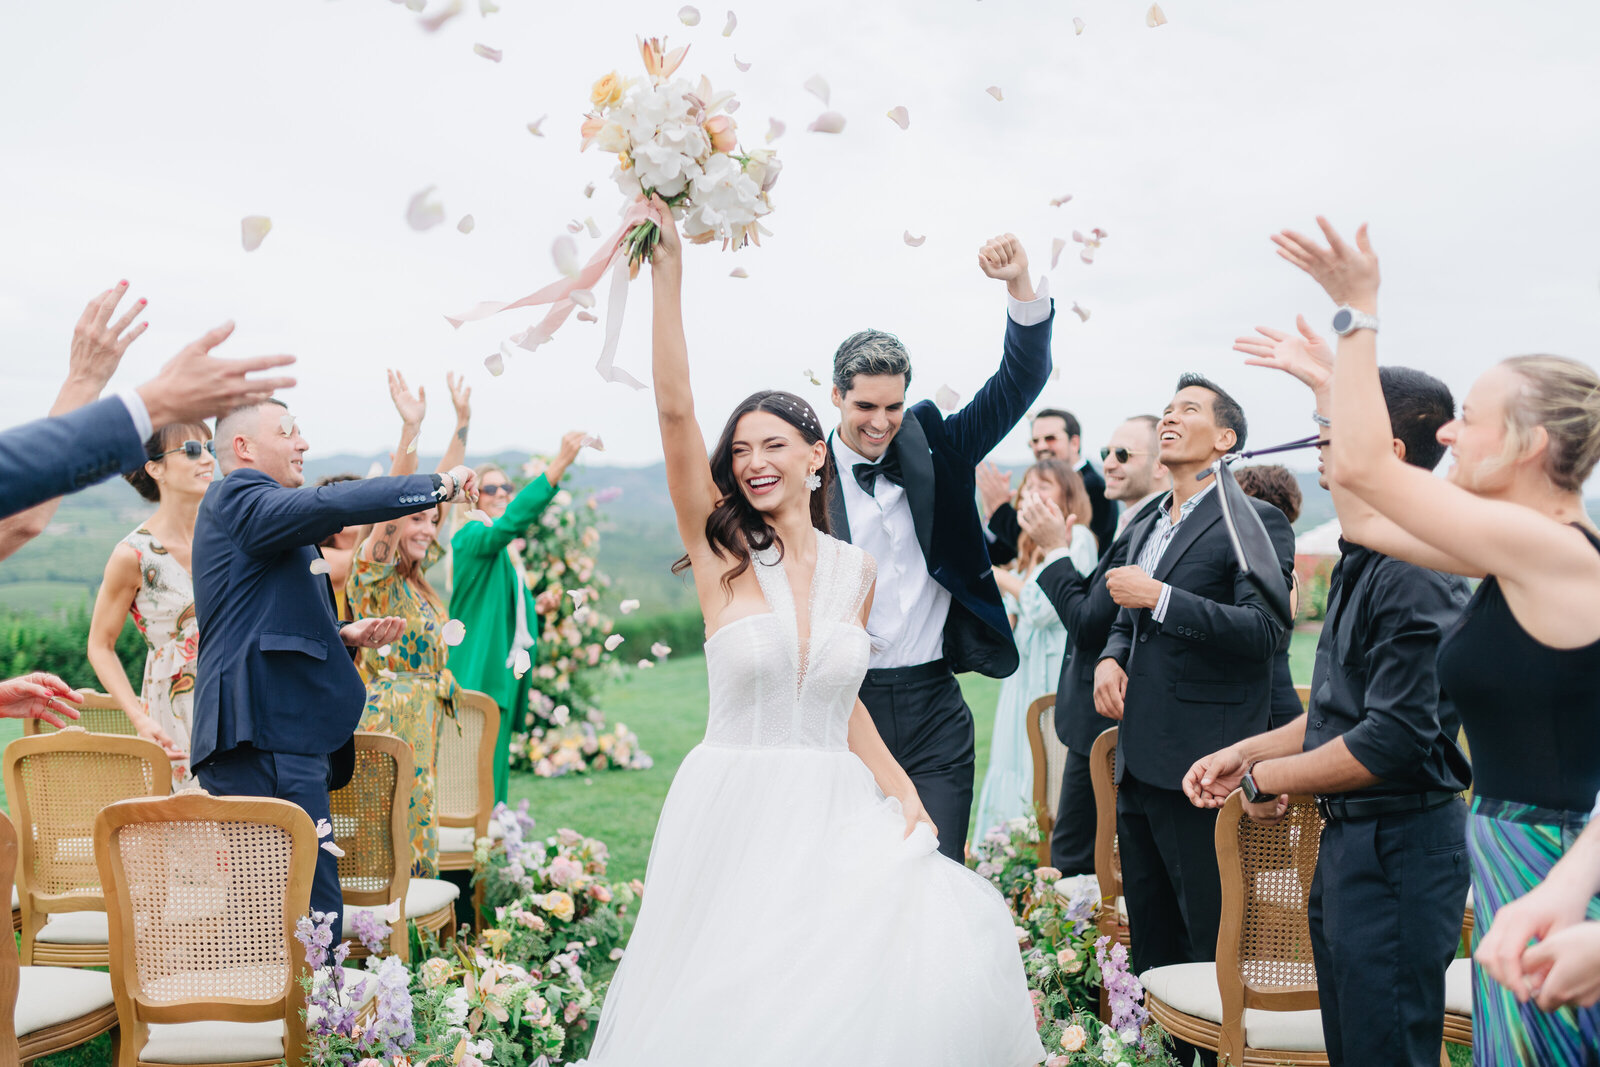 MorganeBallPhotography-Wedding-Tuscany-TheClubHouse-LovelyInstants-03-WeddingCeremony-atmosphere-hq-138-4168